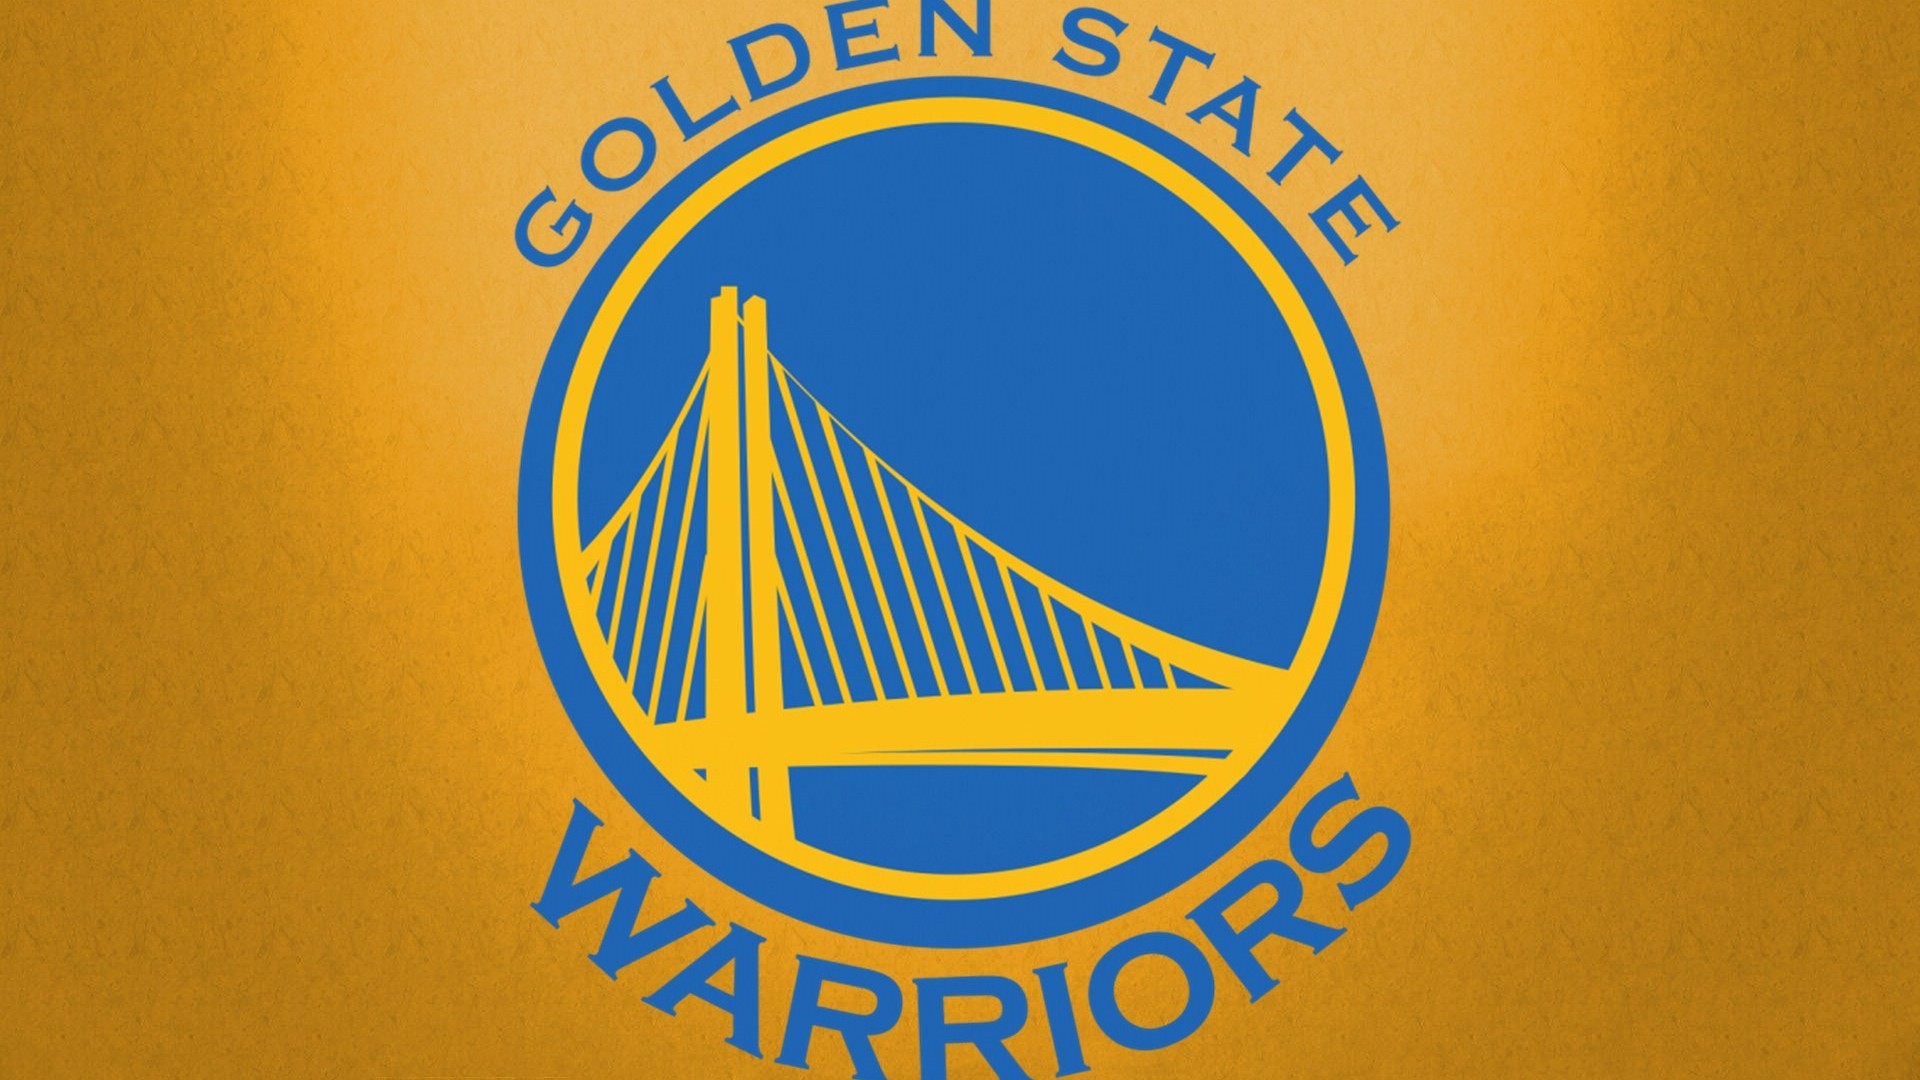 Golden State Warriors logos | PixelsTalk.Net